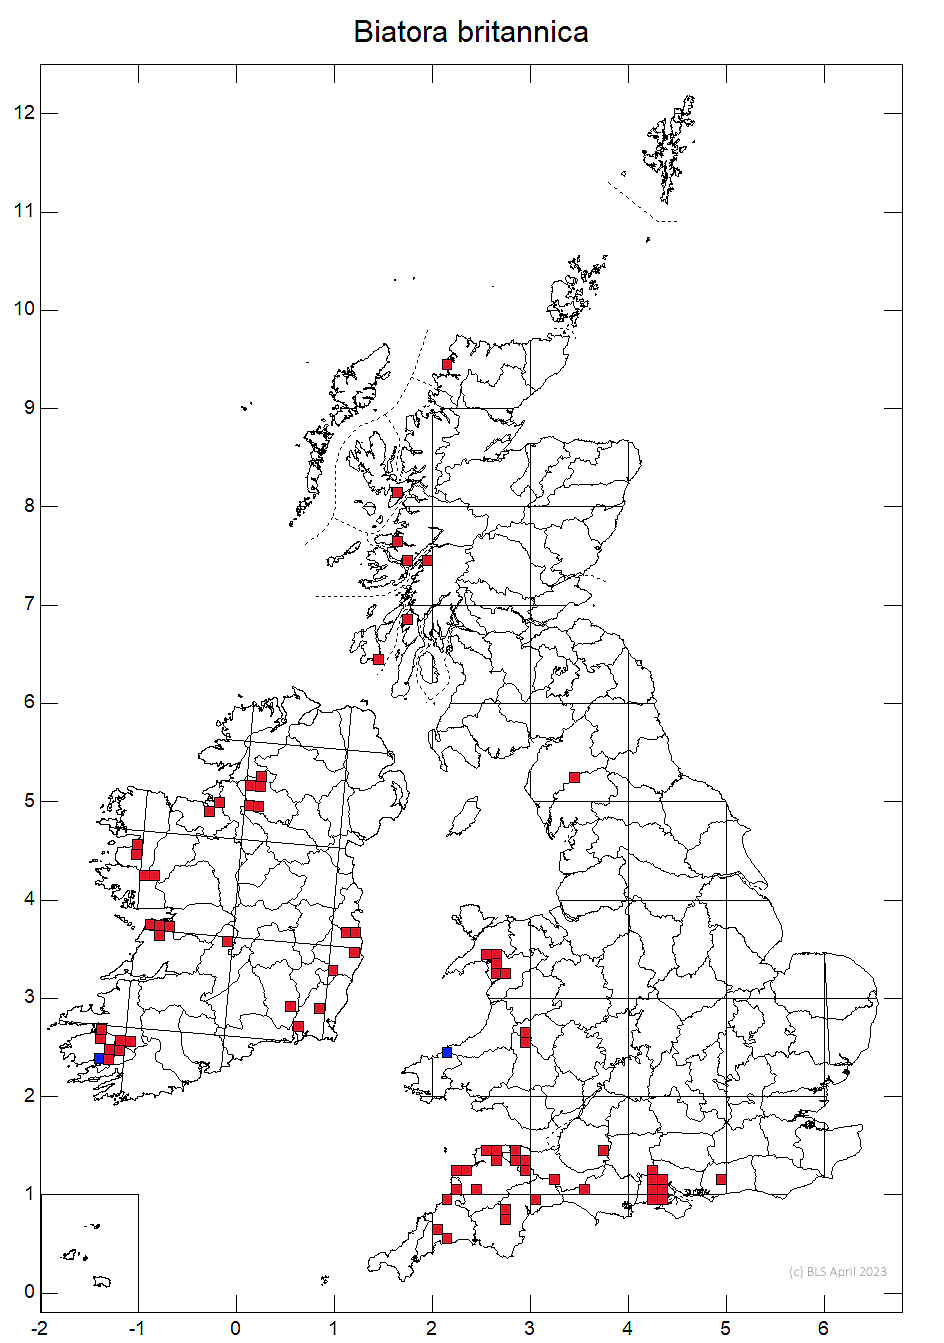 Biatora britannica 10km sq distribution map